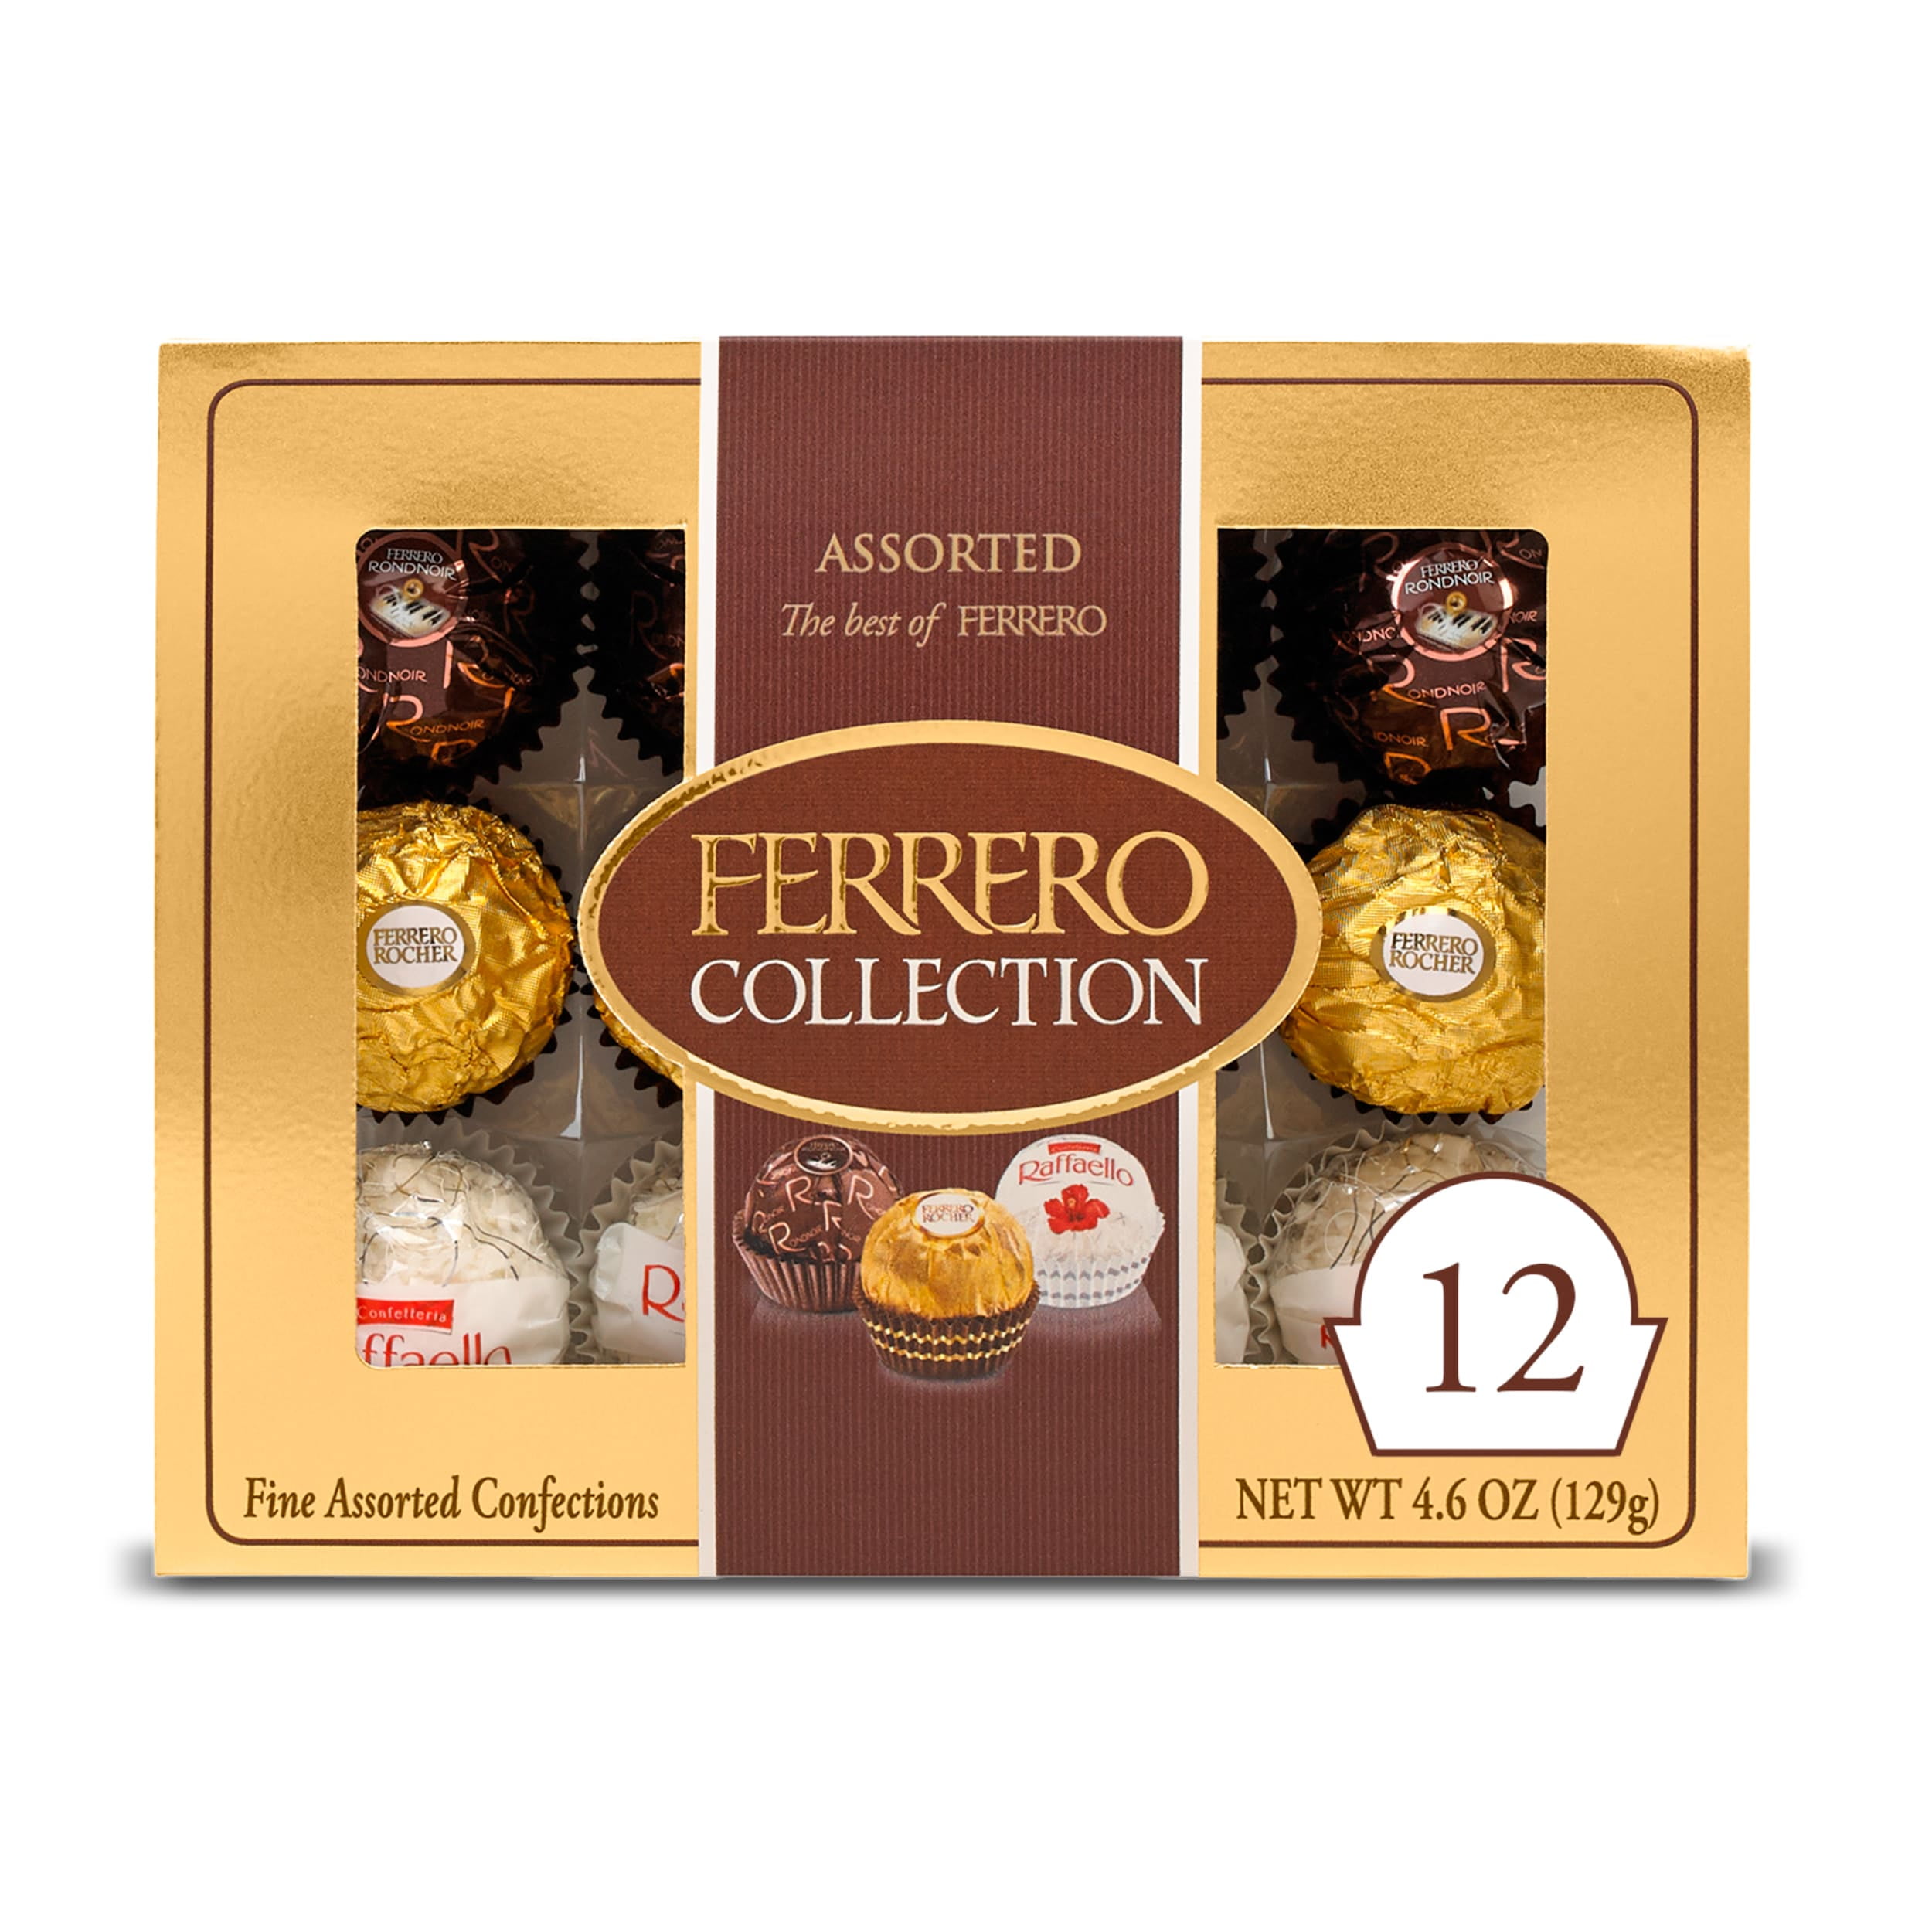 Ferrero ColleCtion Premium Gourmet Assorted Hazelnut Milk Chocolate, Dark Chocolate and Coconut, 4.6 oz